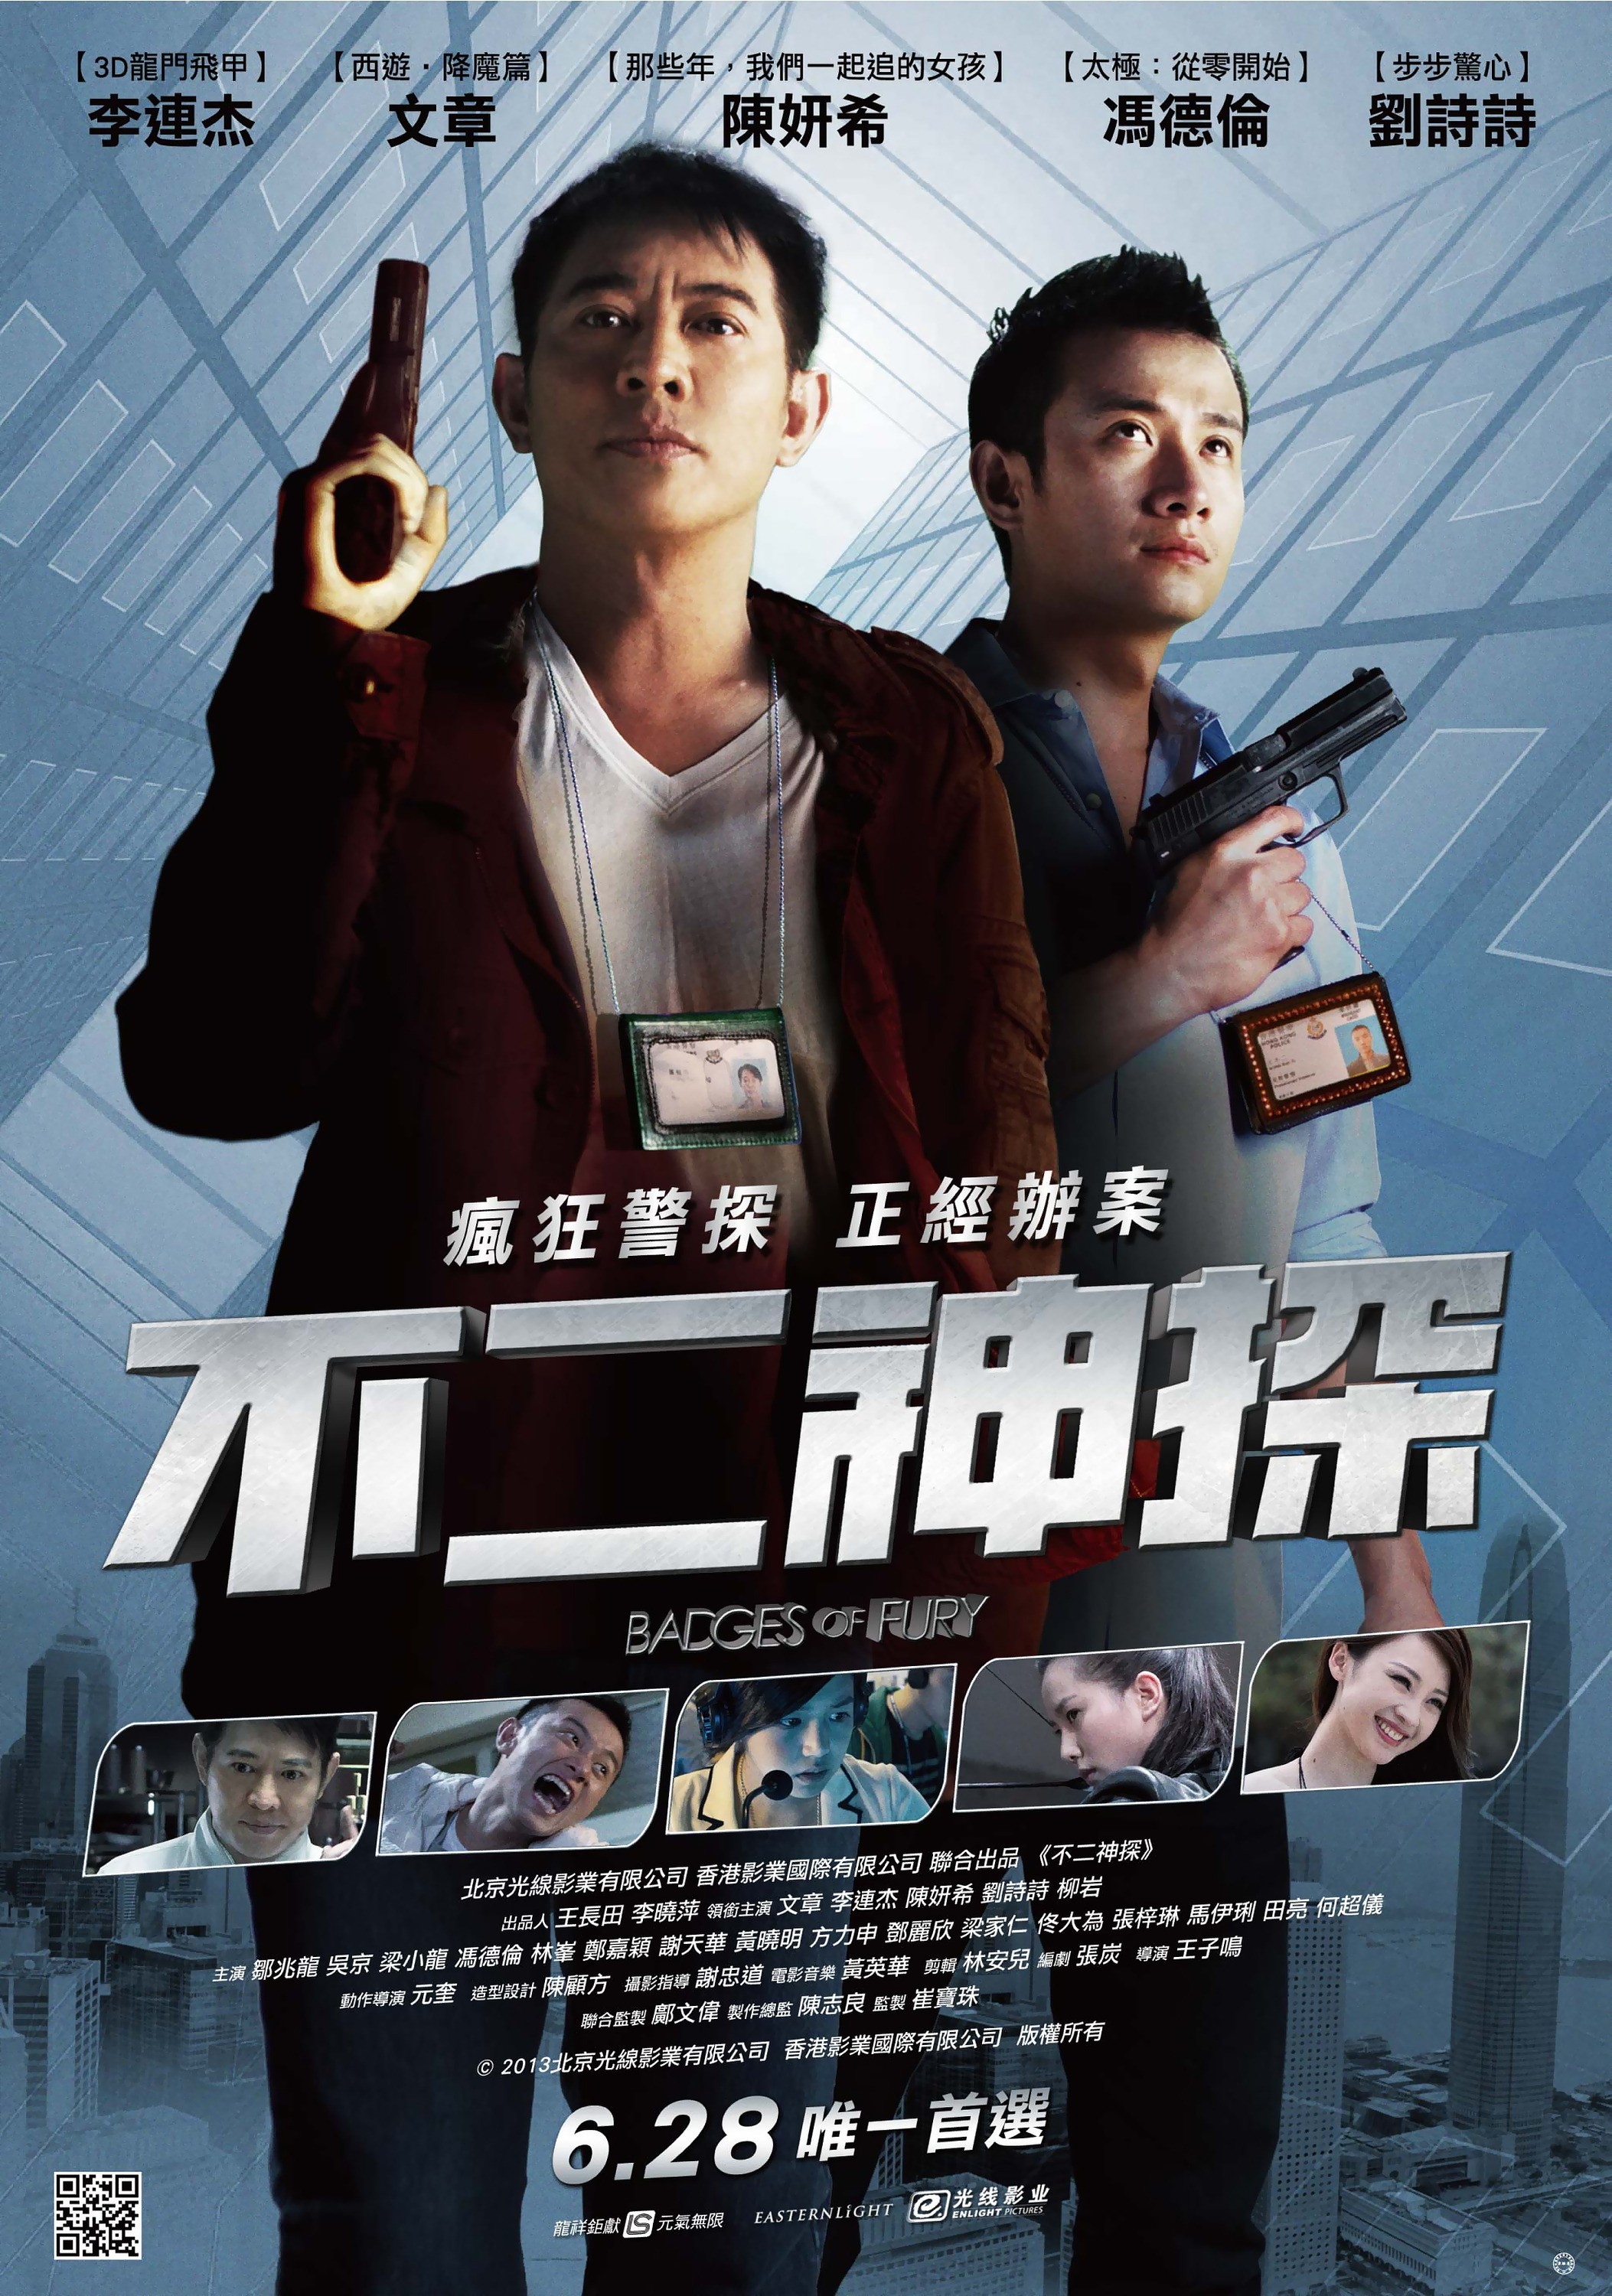 Mega Sized Movie Poster Image for Bu er shen tan (#2 of 5)